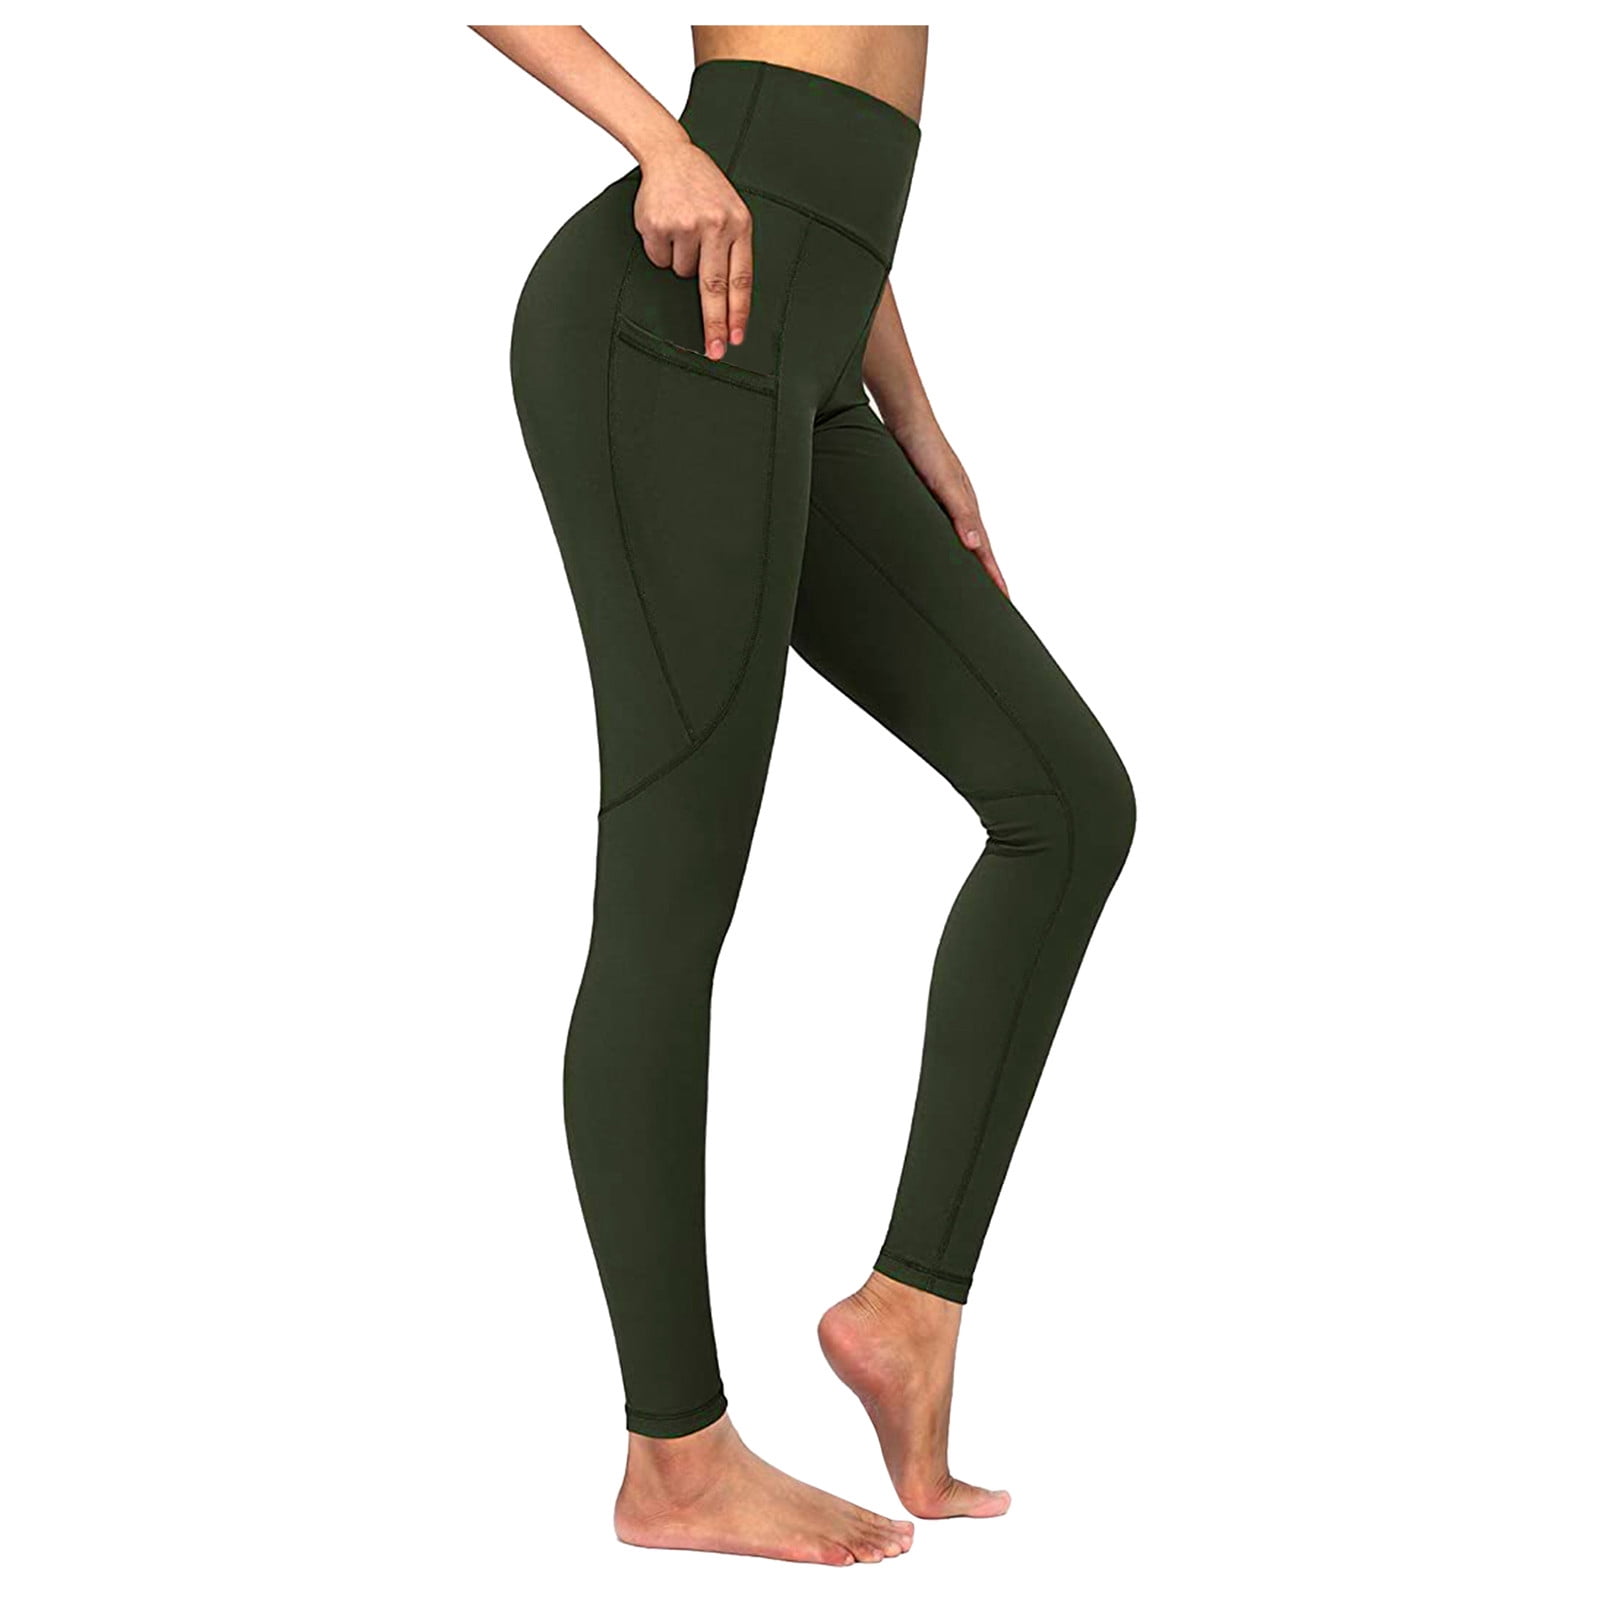 Workout Running Print Leggings Fitness Women's Yoga Sports Pants Pants Sheer  Yoga Pants plus Size Womens Yoga Pants with Pockets 